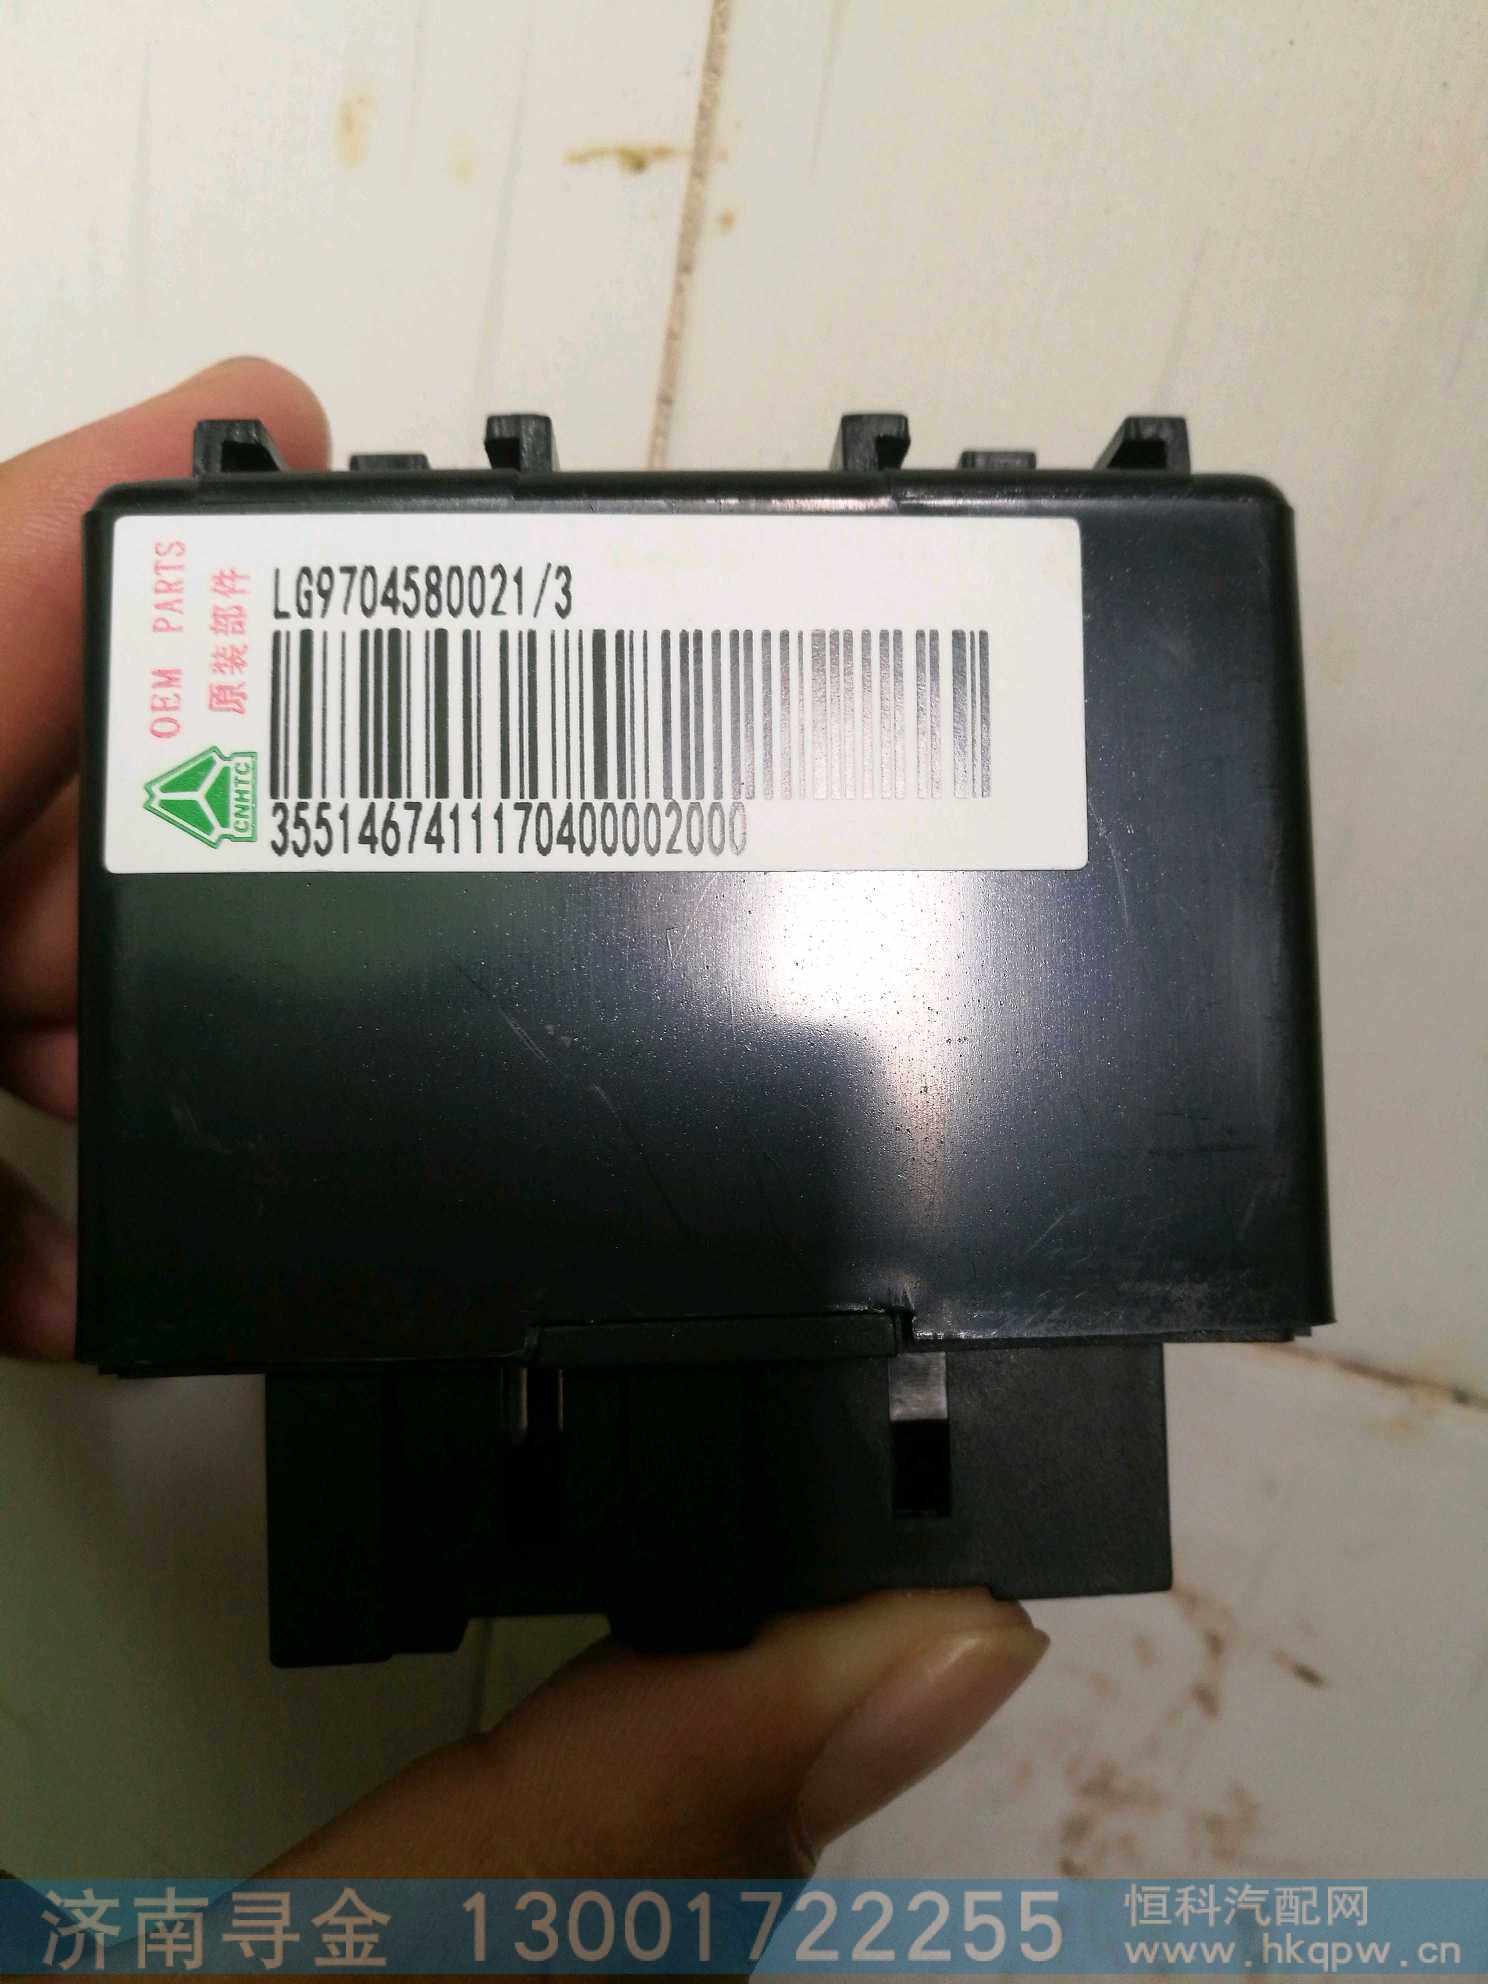 LG9704580021,三合一控制器,济南寻金贸易有限公司